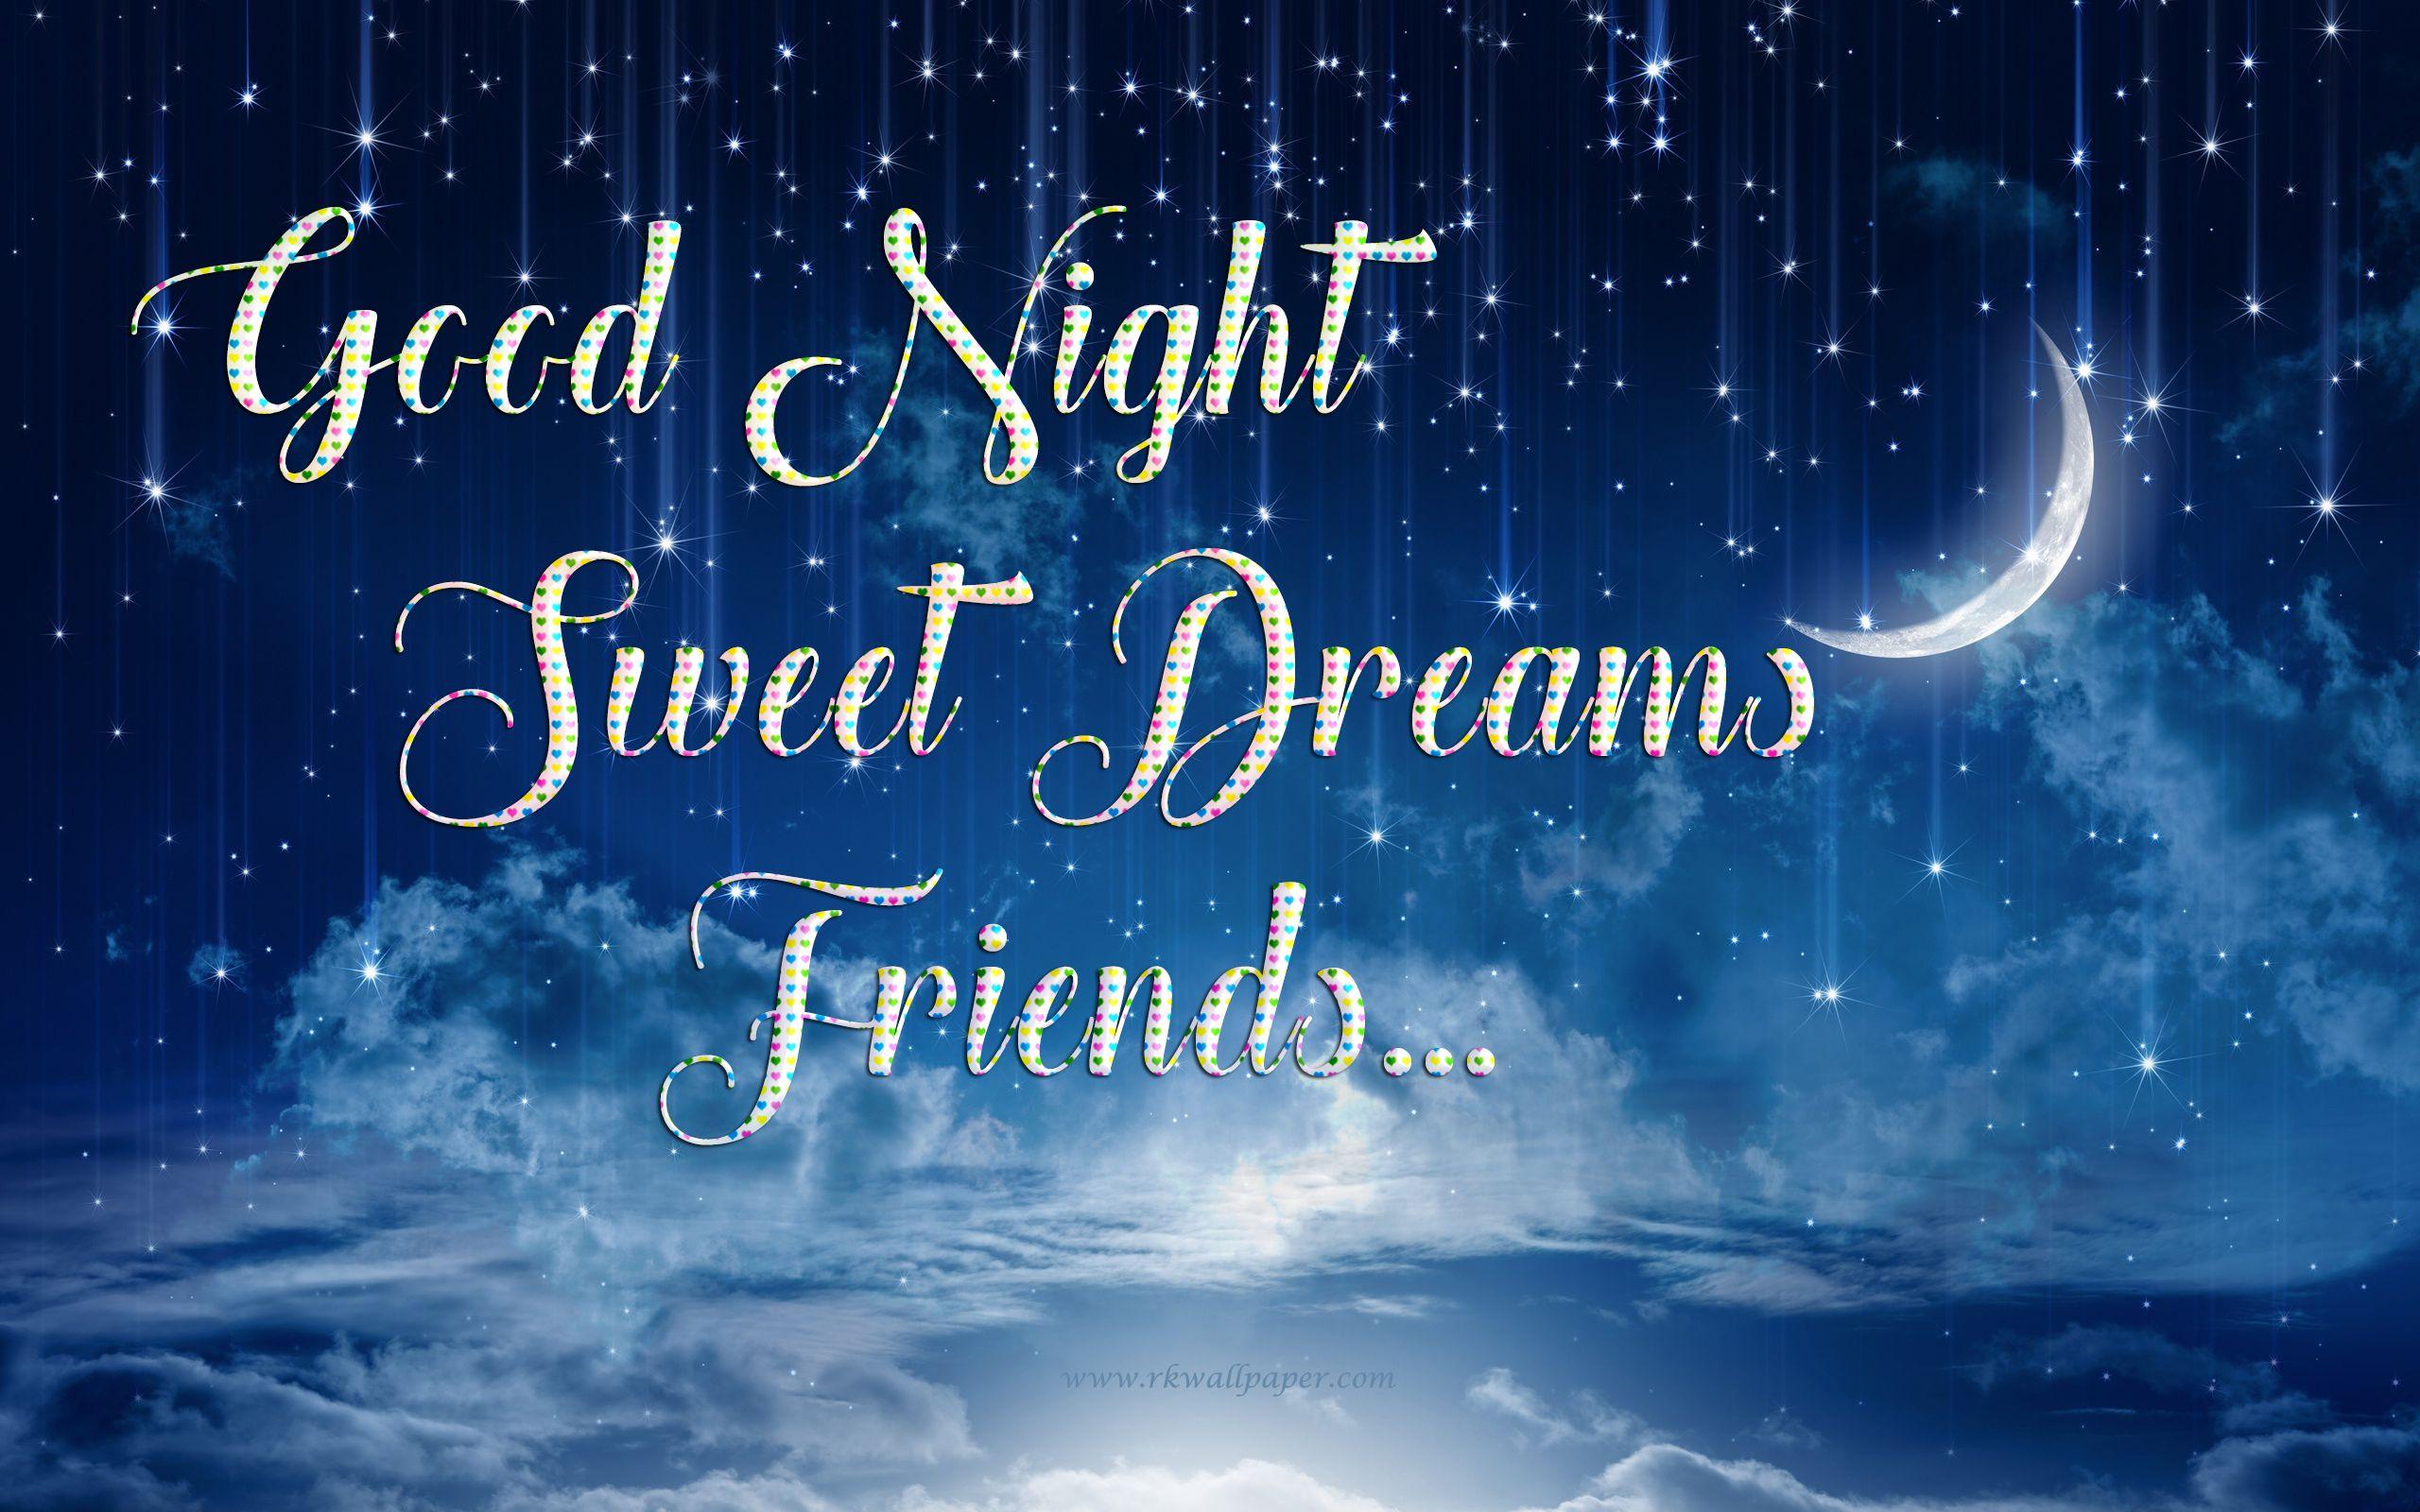 good night sweet dreams friends HD image